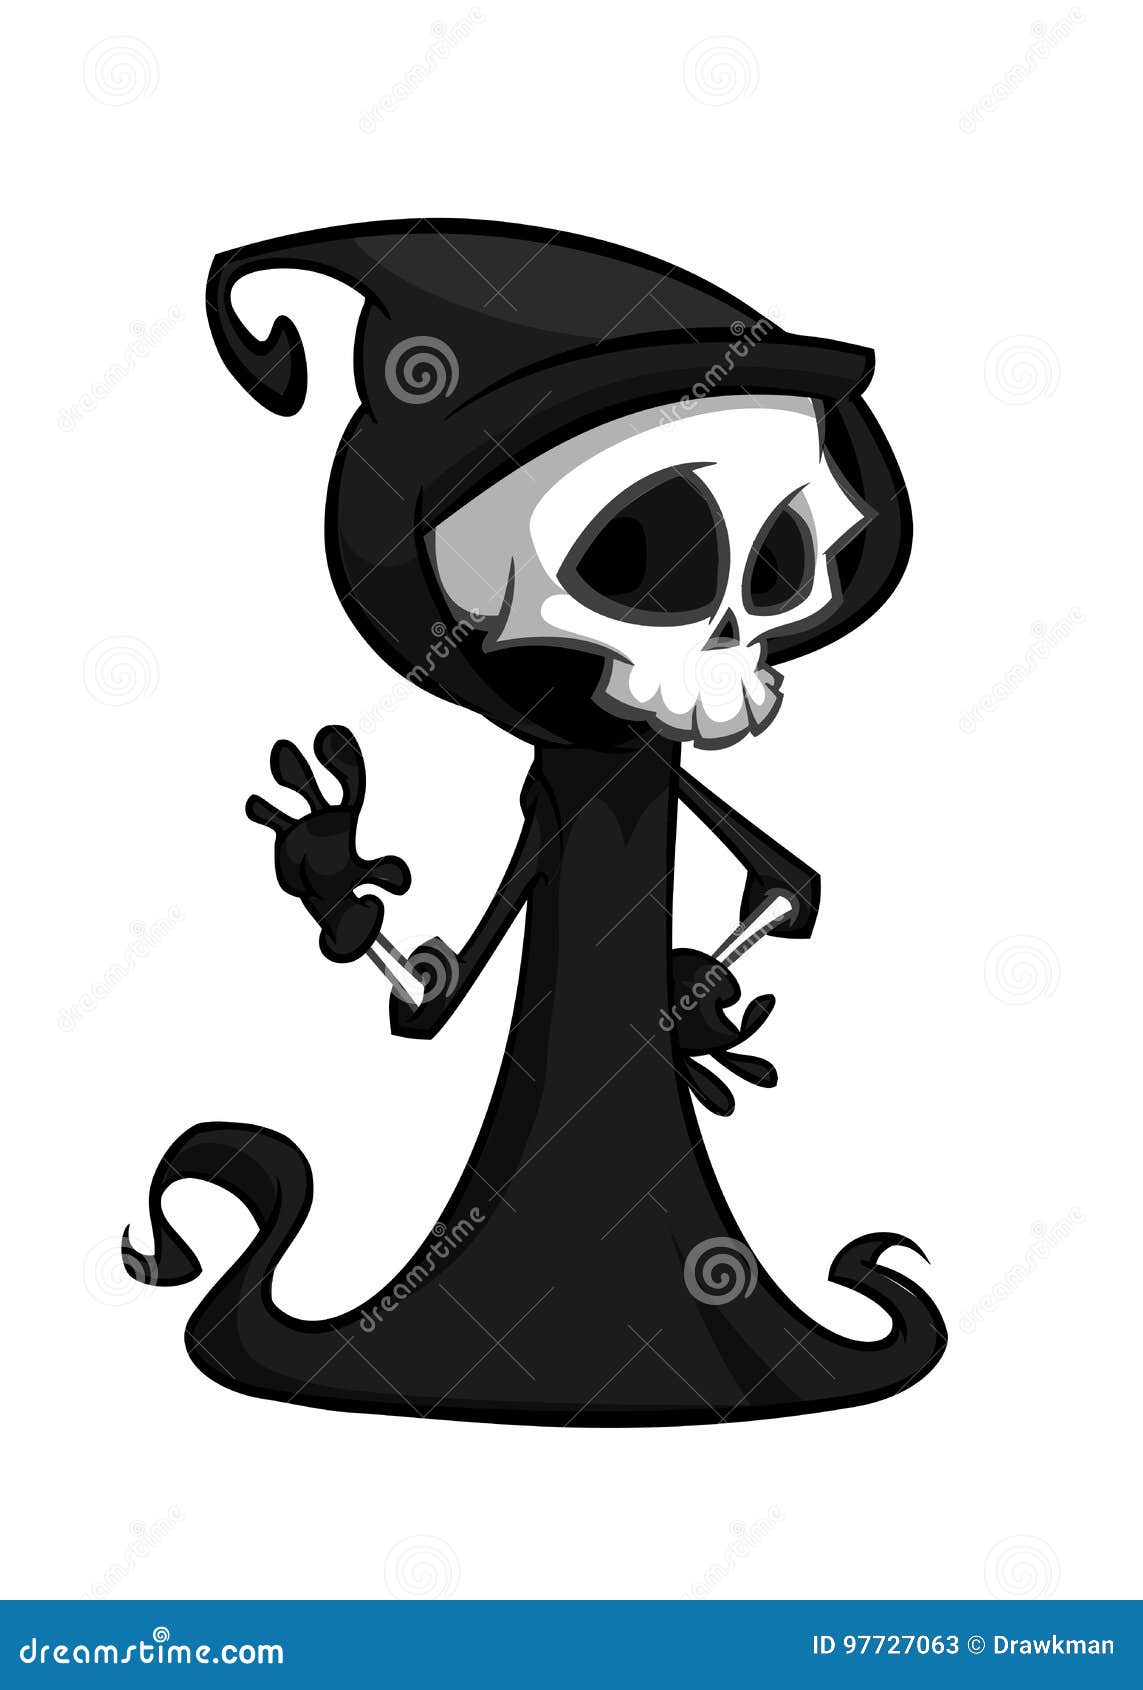 Vector Illustration of Cartoon Death Halloween Monster Mascot Isolated ...